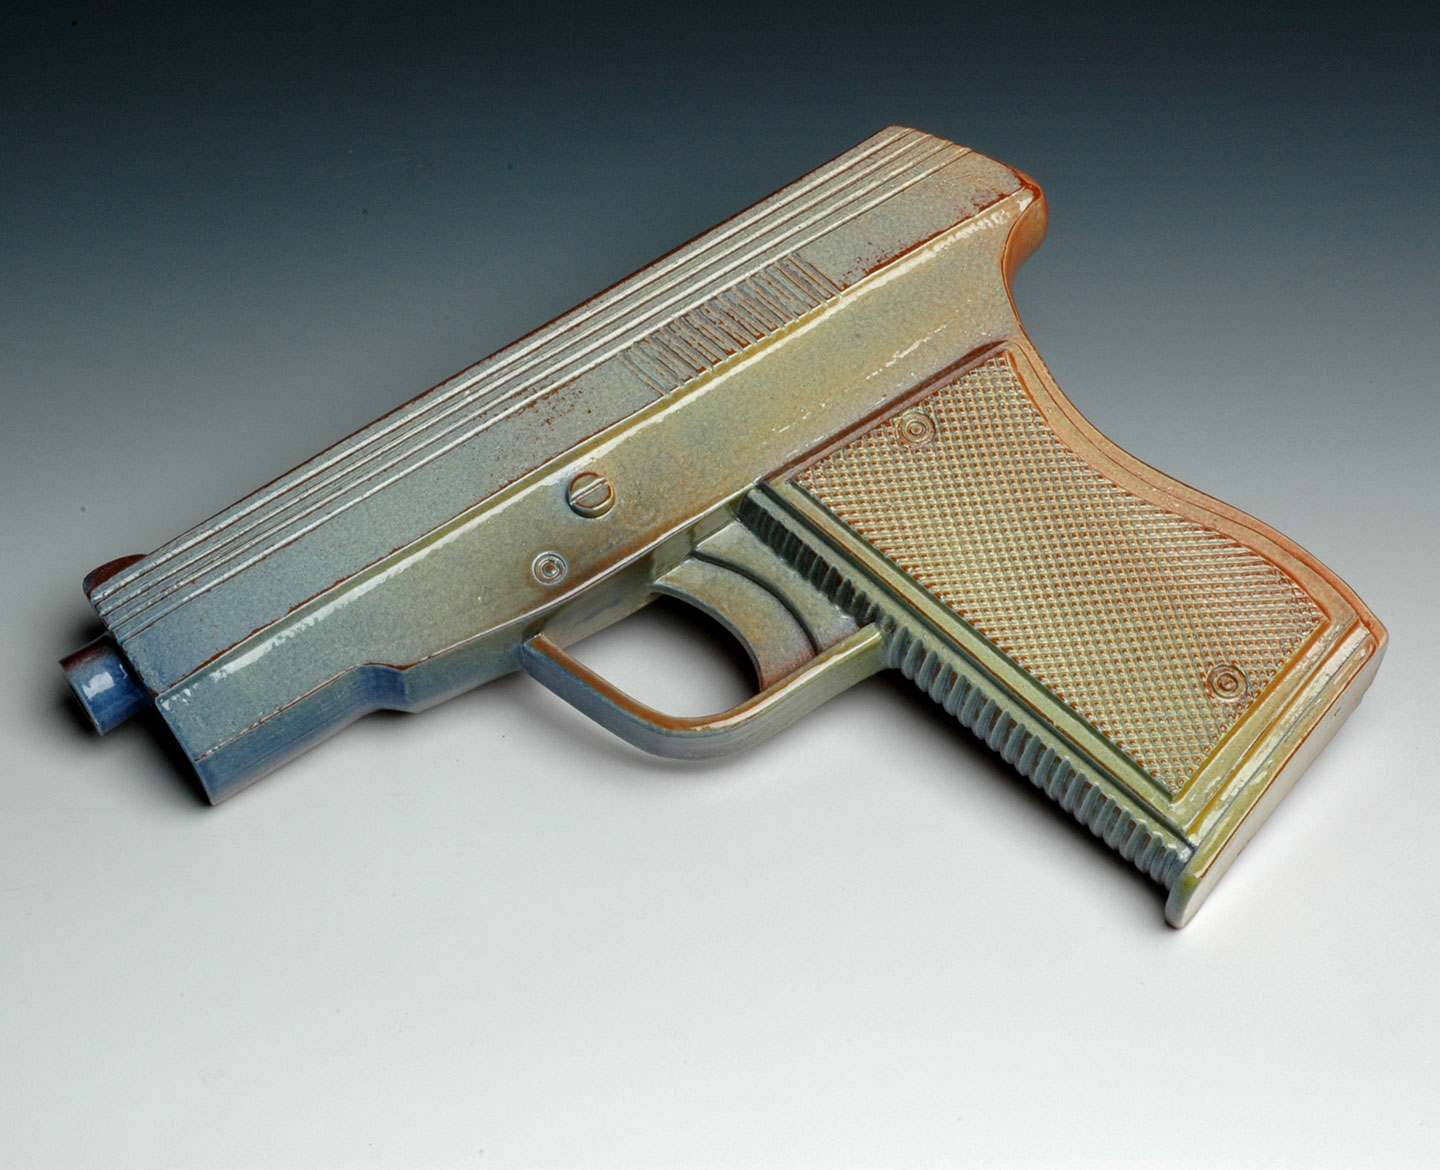 Potgun 1, a large pistol, ceramic, length 30cm, wow